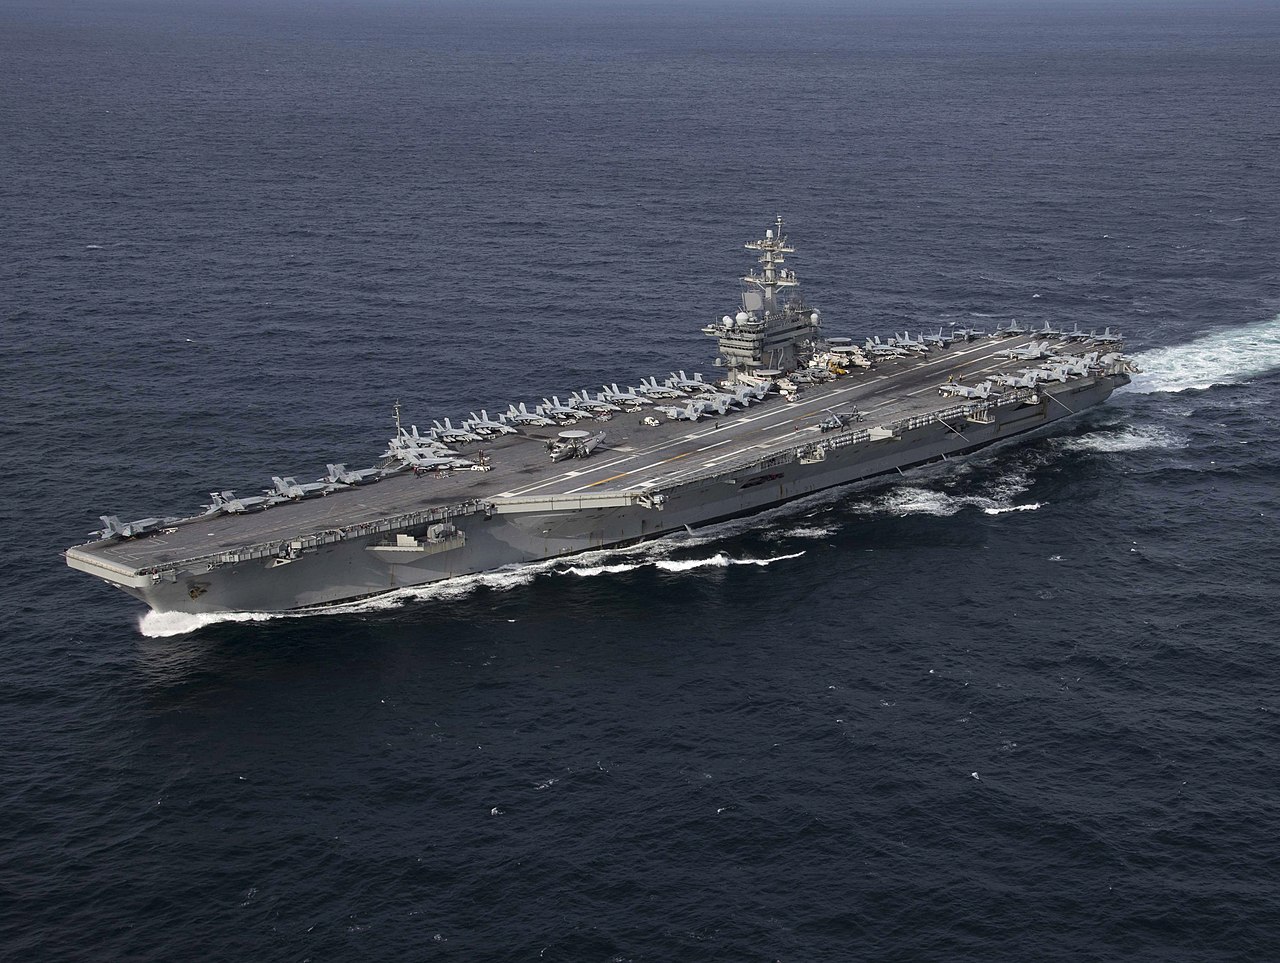 1280px-USS_Abraham_Lincoln_%28CVN-72%29_underway_in_the_Atlantic_Ocean_on_30_January_2019_%28190130-N-PW716-1312%29.JPG